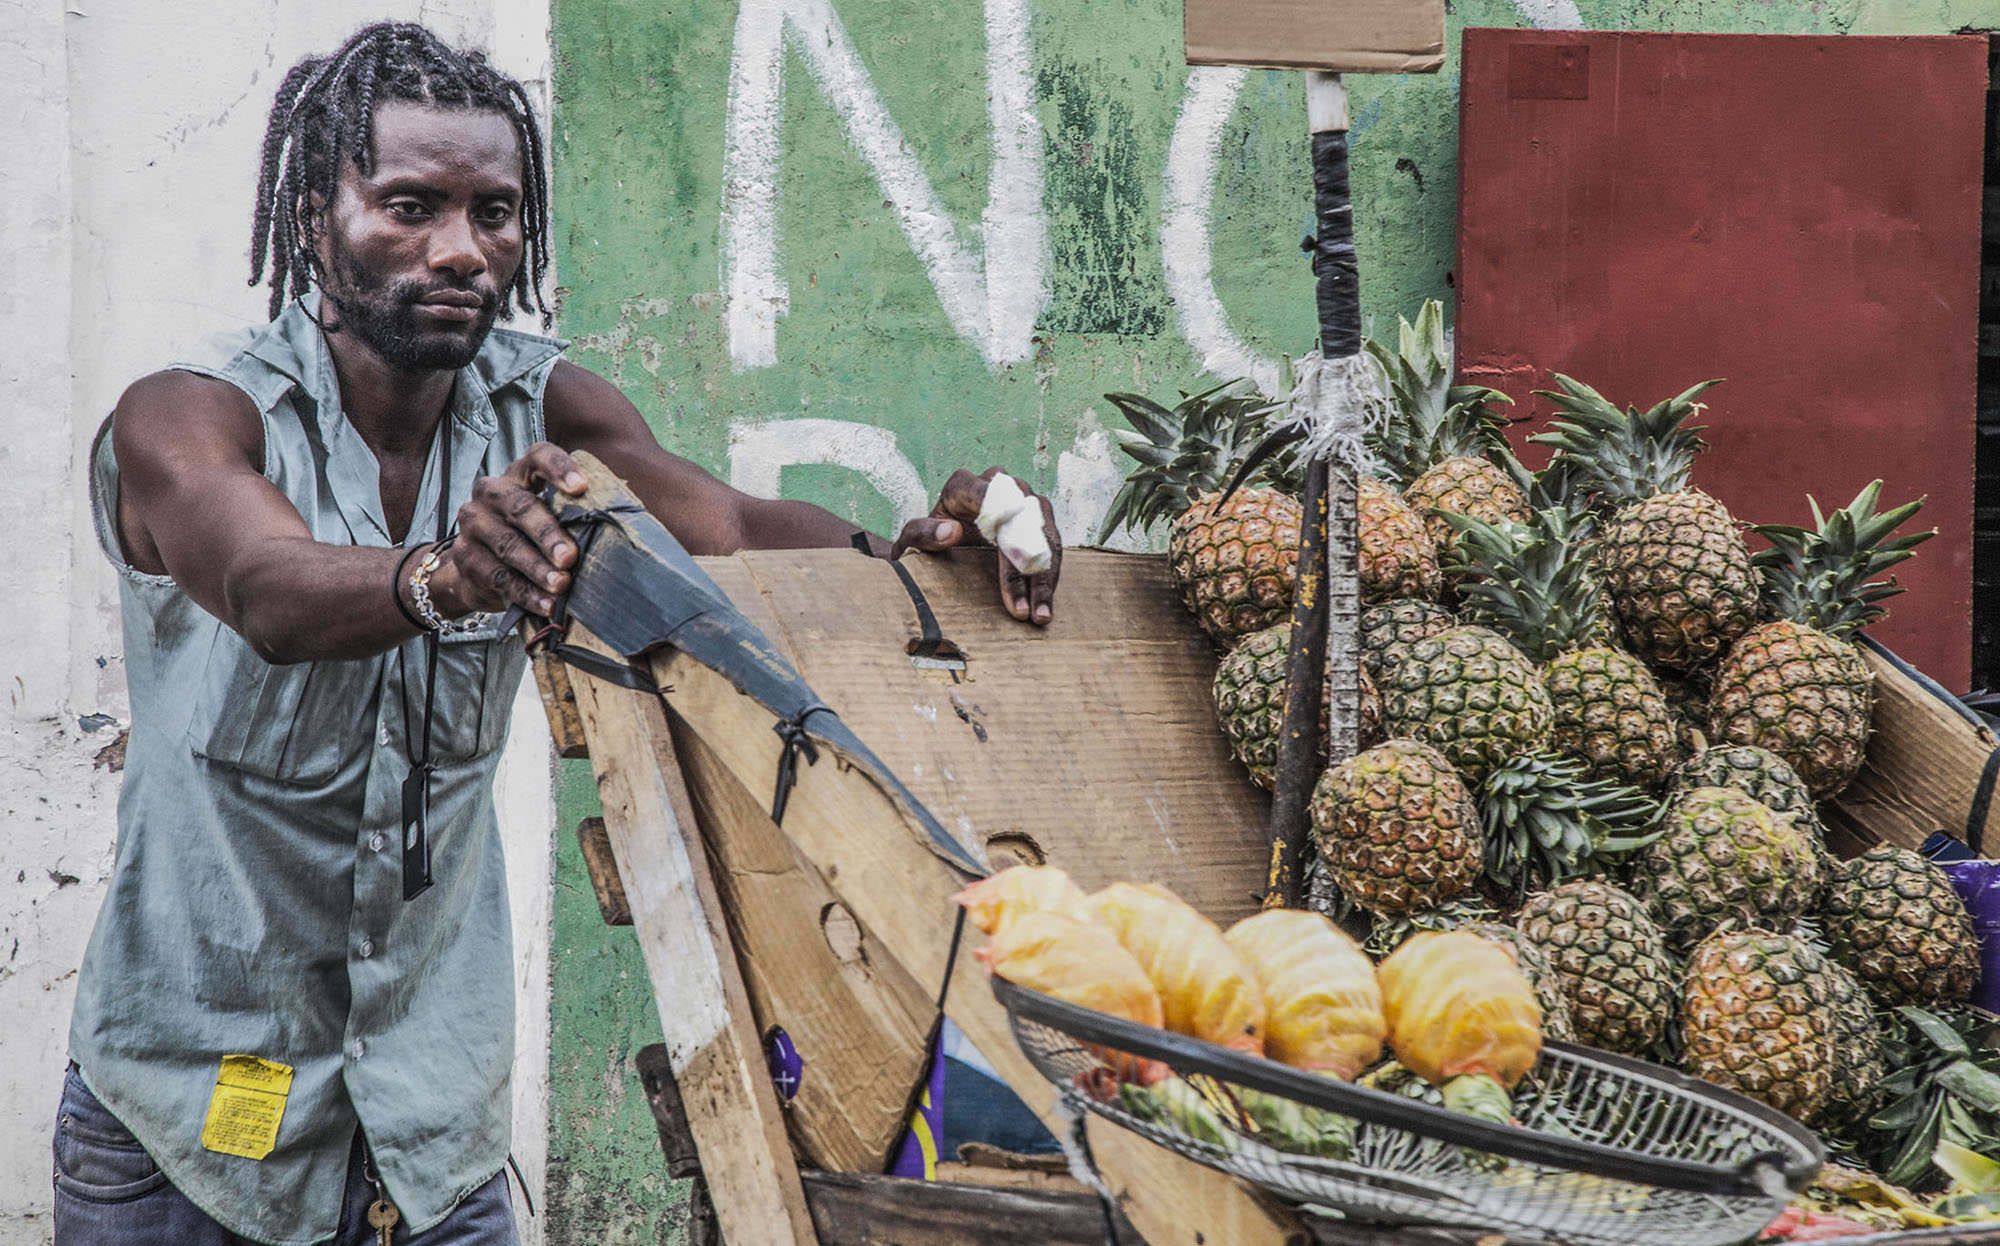 A Haitian immigrant selling pineapples in Santo Domingo Dominican Republic